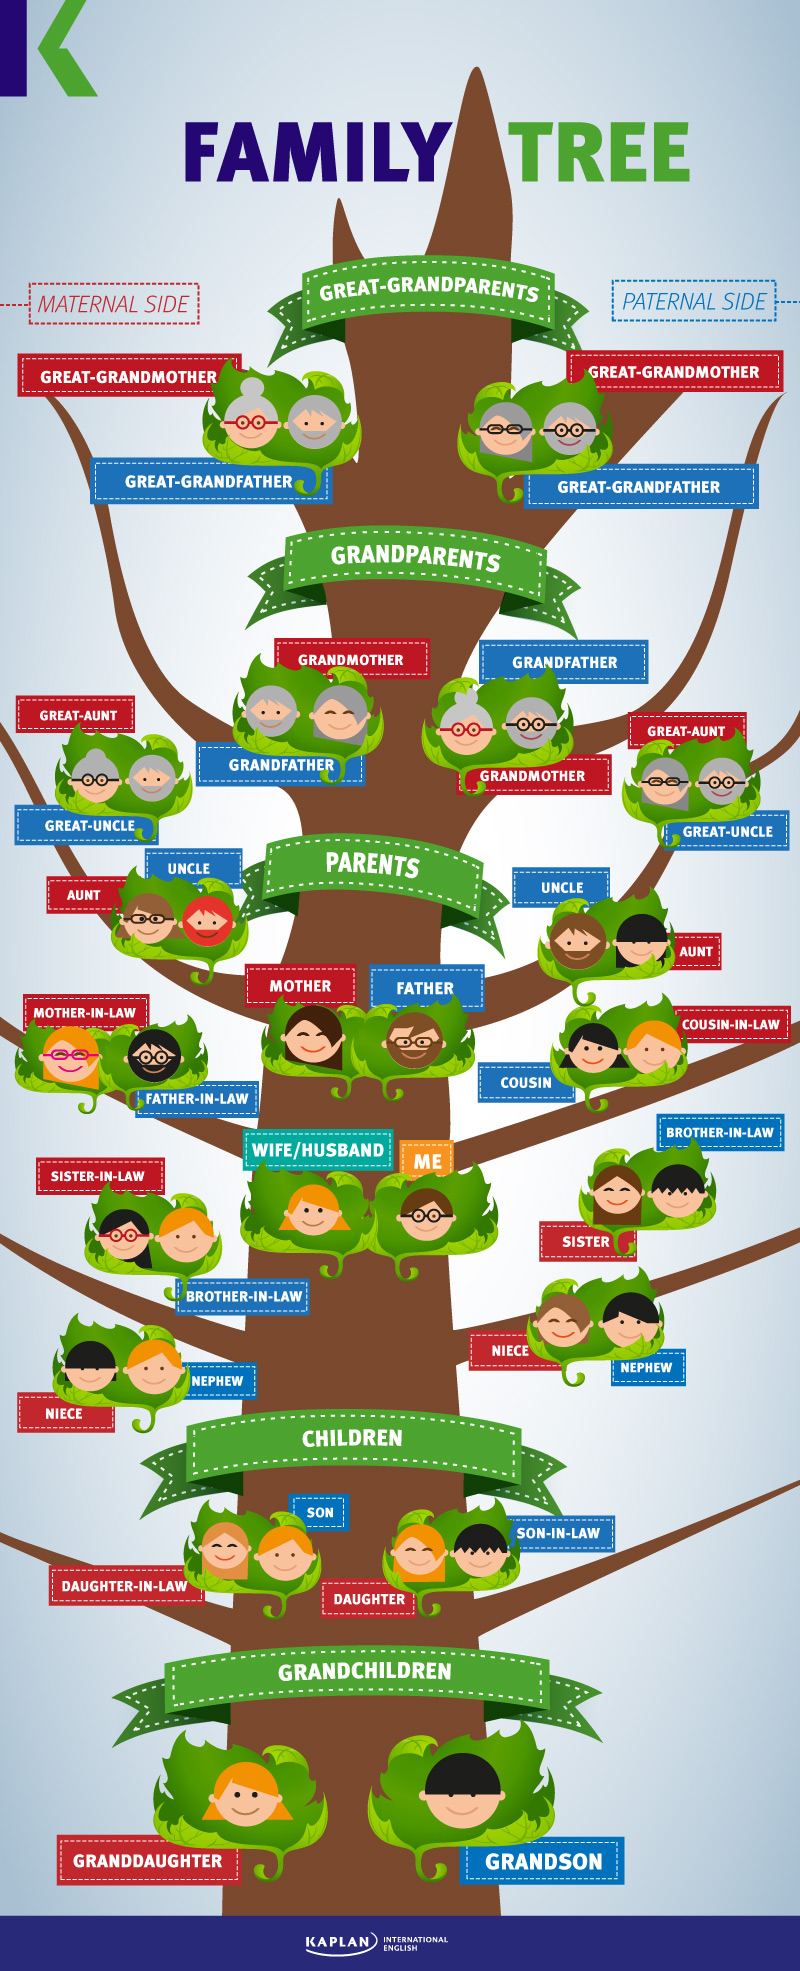 family-tree-infographic-